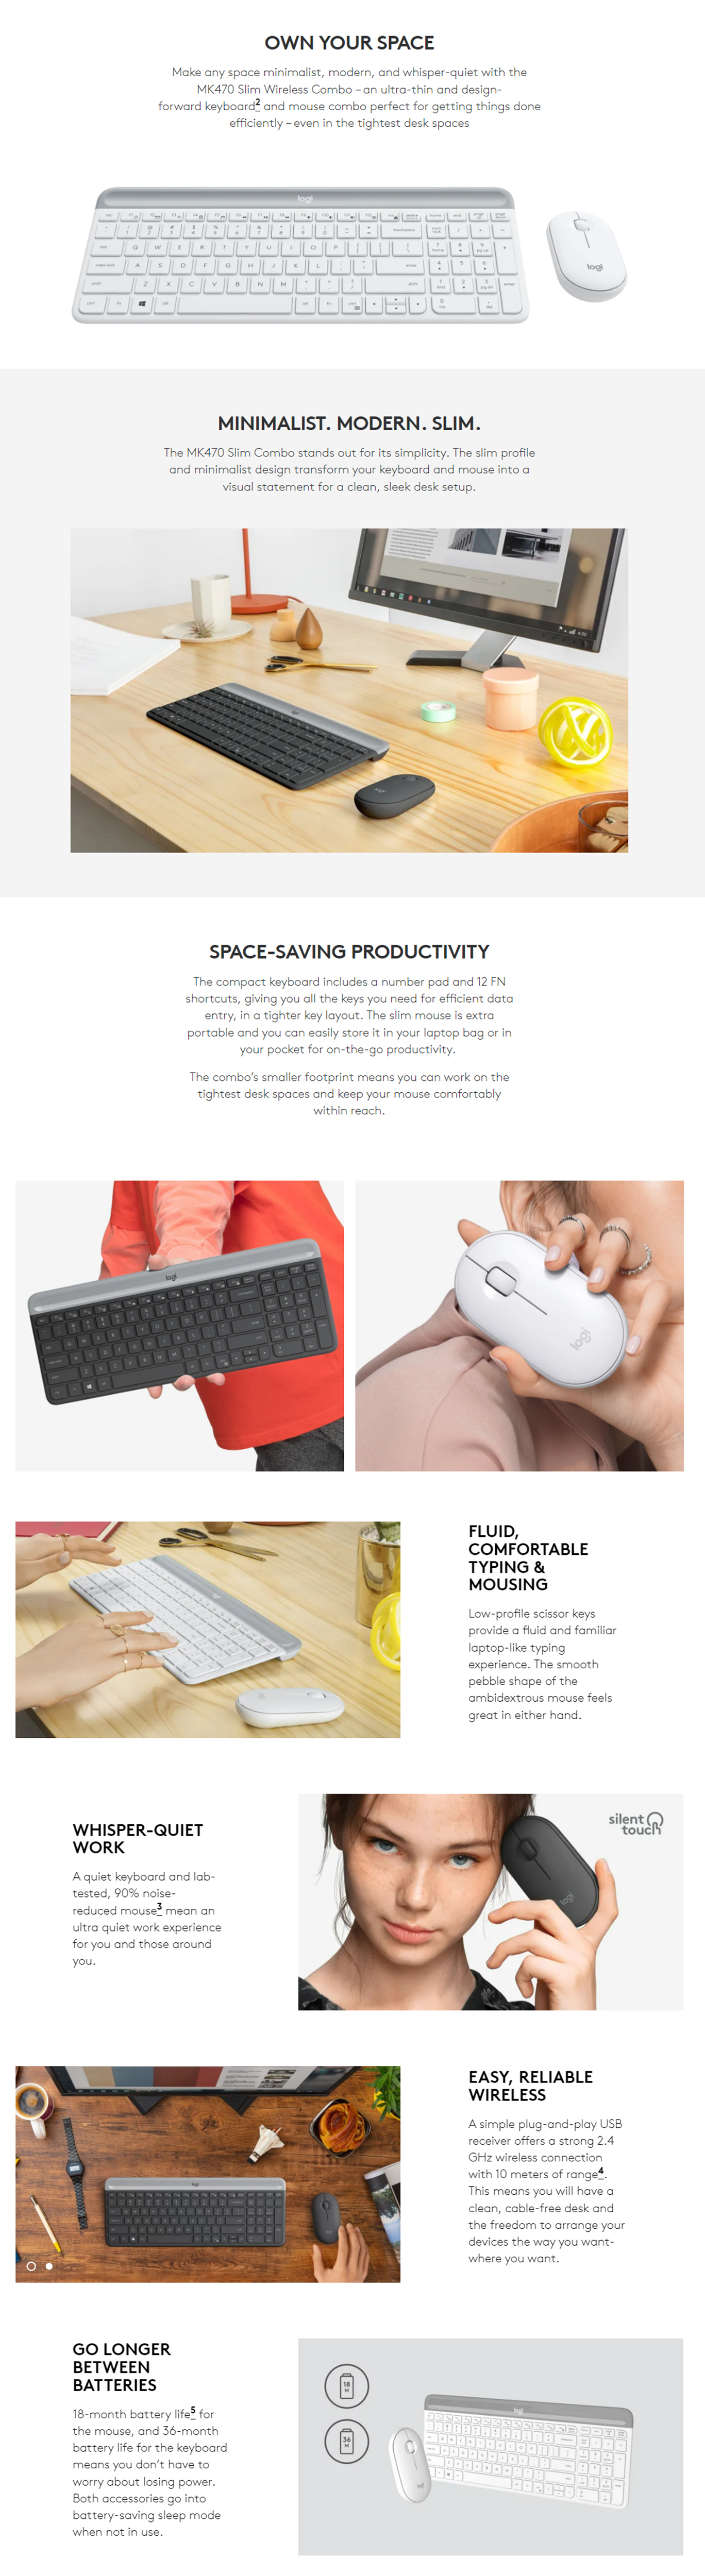 Keyboards-Logitech-MK470-Slim-Wireless-Keyboard-and-Mouse-Combo-White-2